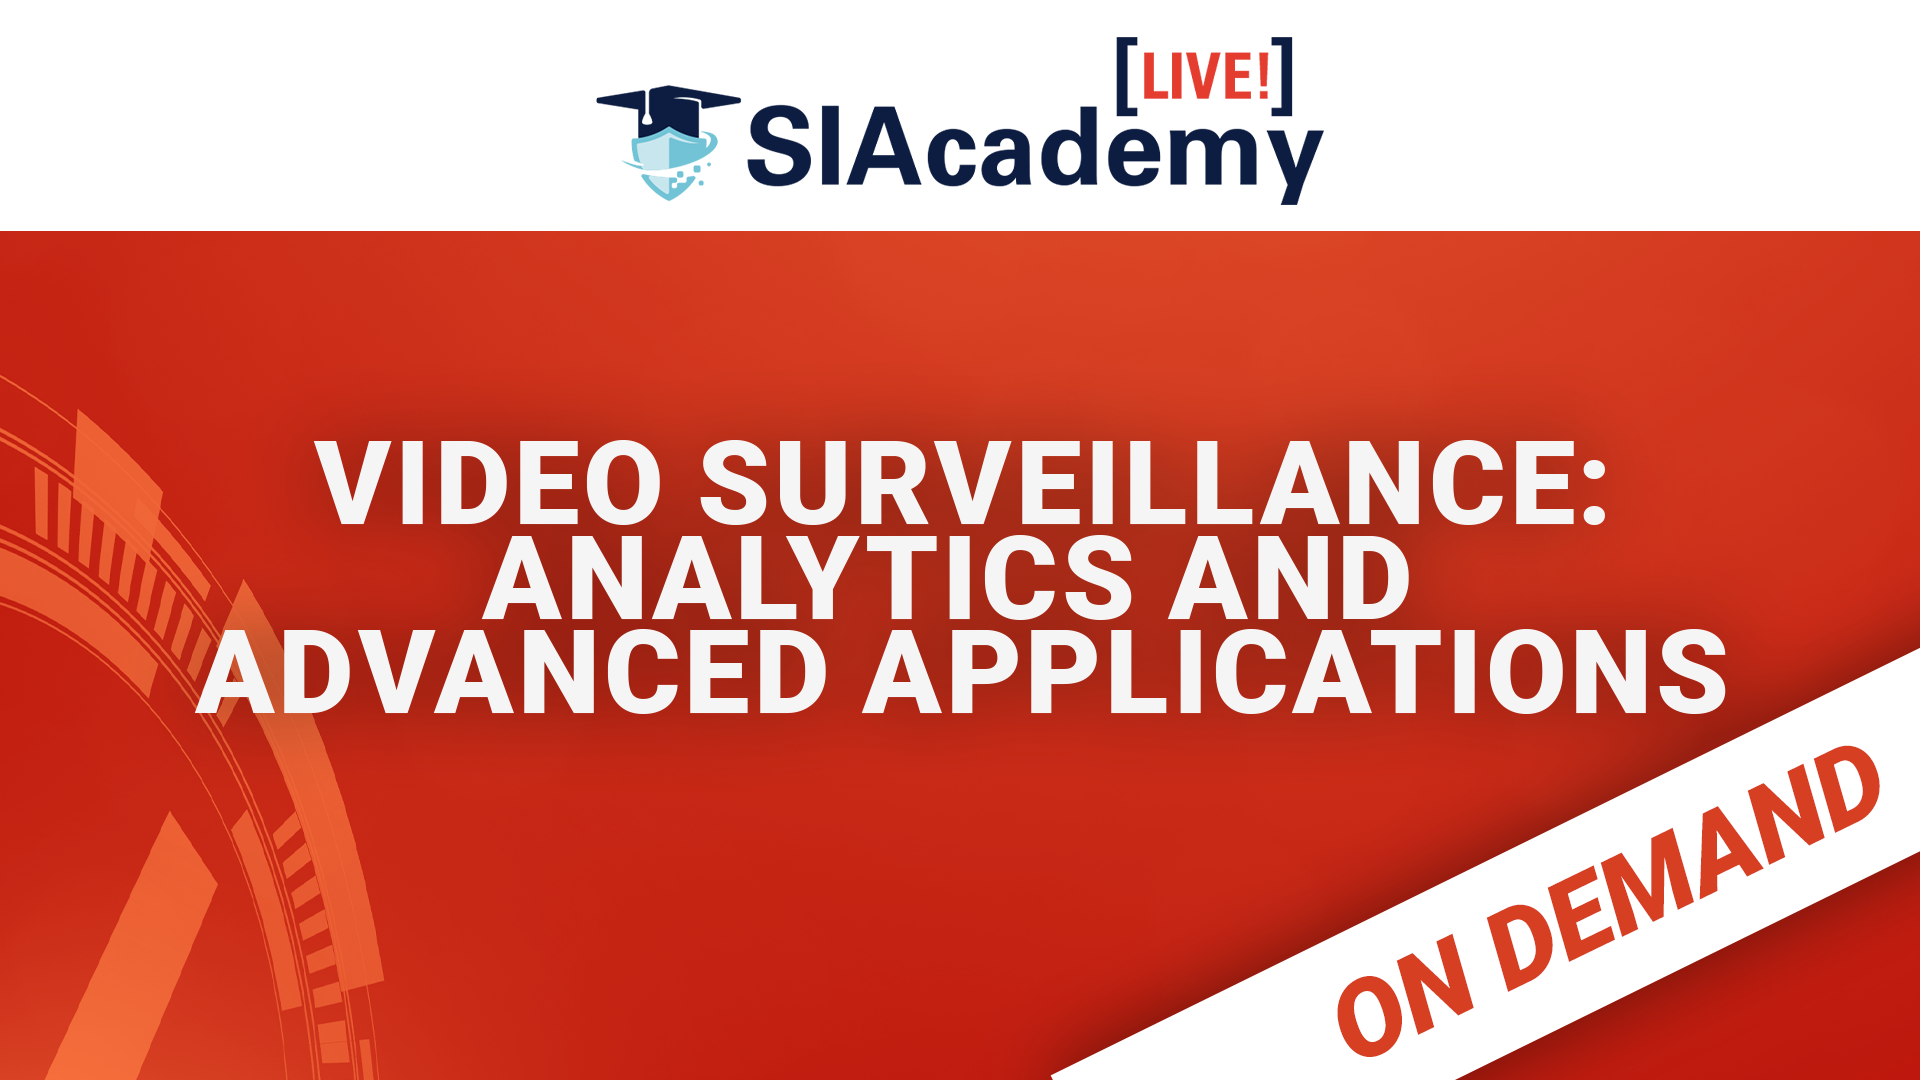 SIAcademy video surveillance